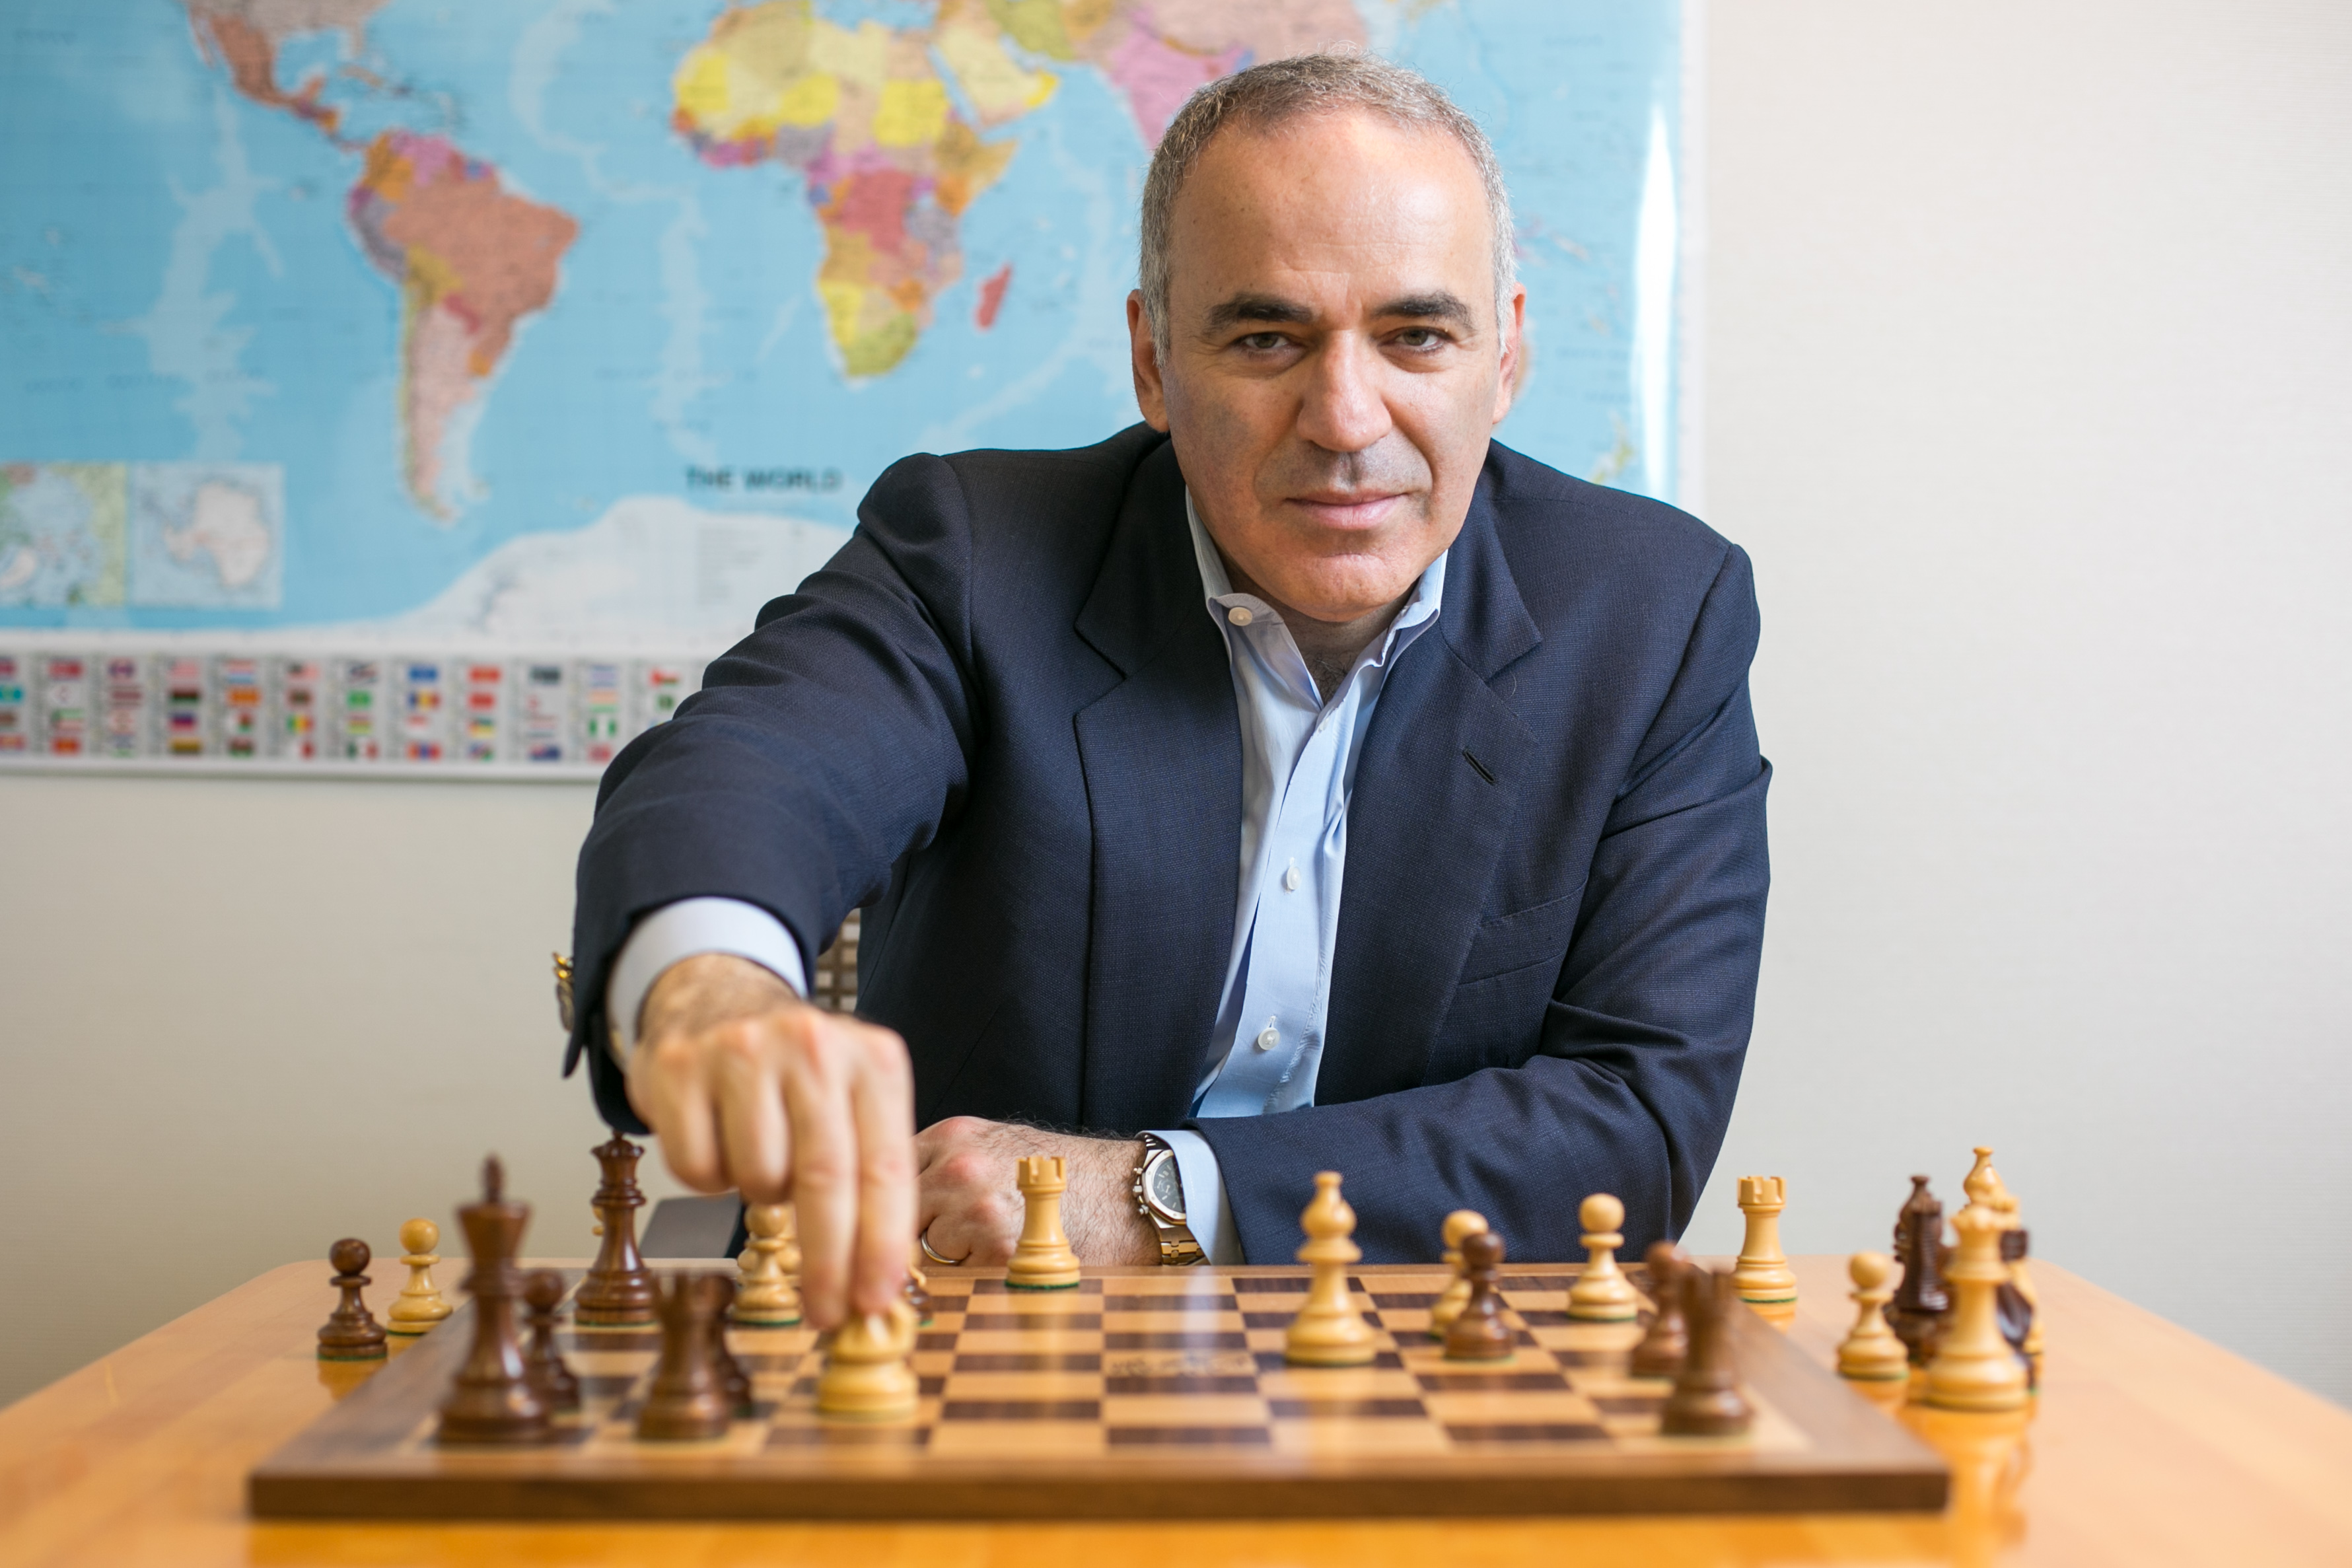 Garry Kasparov (Chess Grandmaster and Political Activist) - On